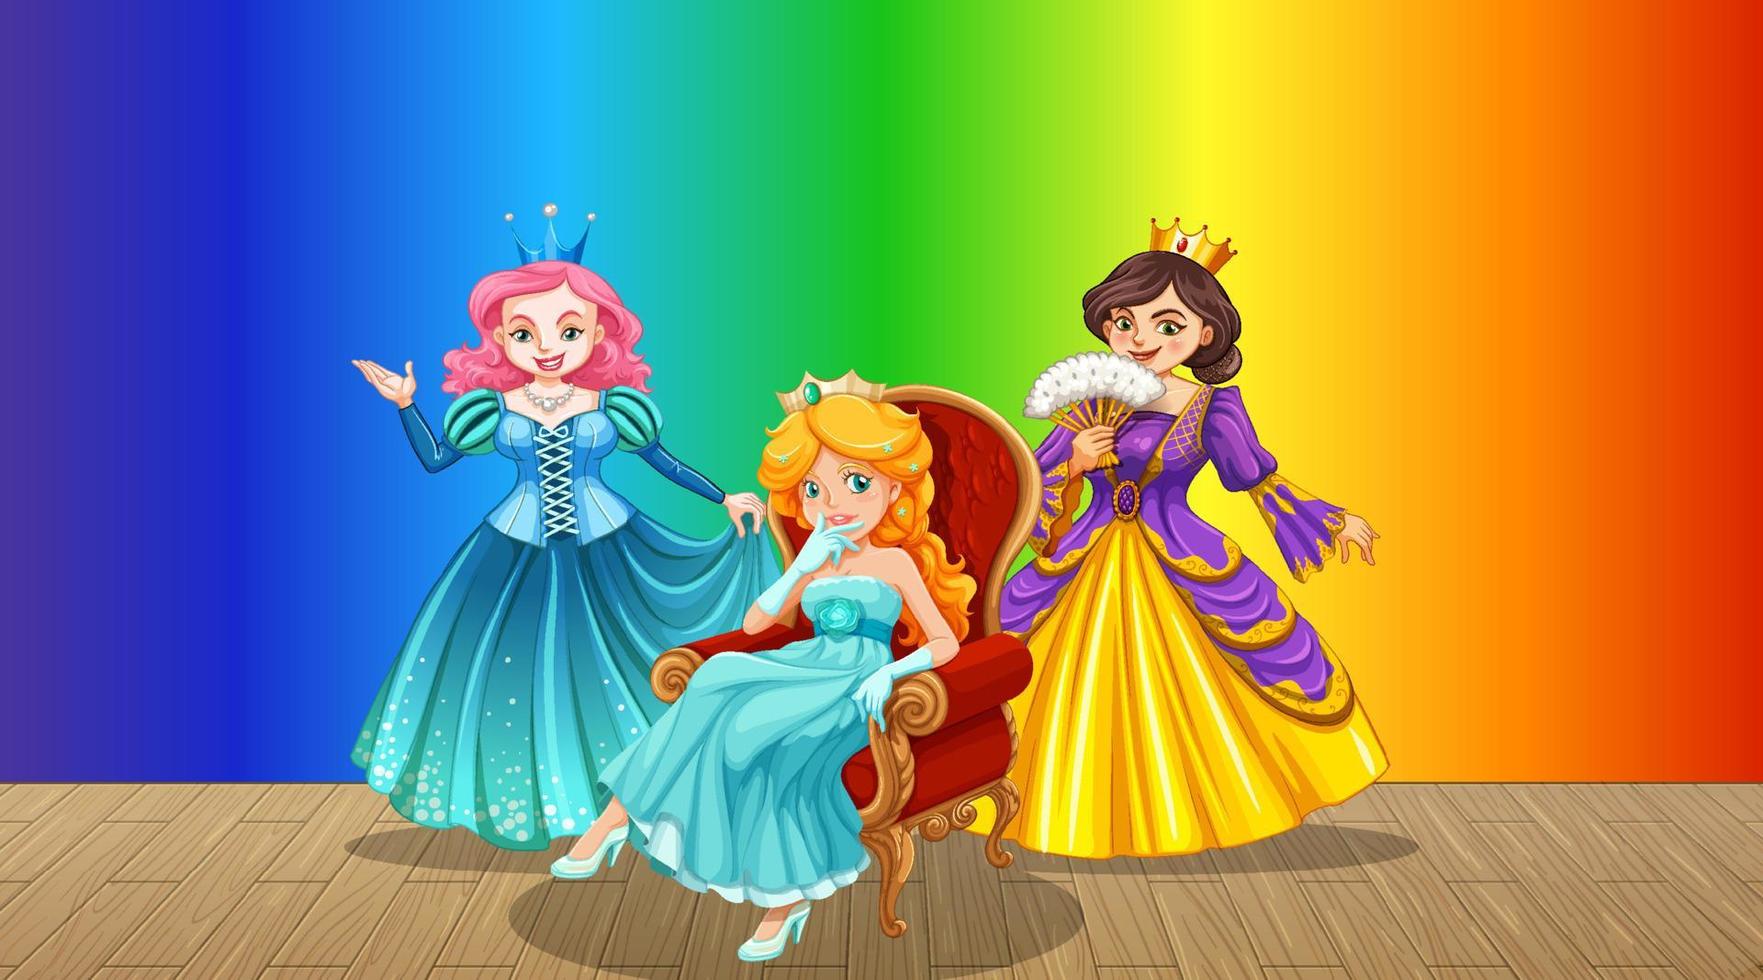 personaje de dibujos animados princesa sobre fondo degradado arcoíris vector